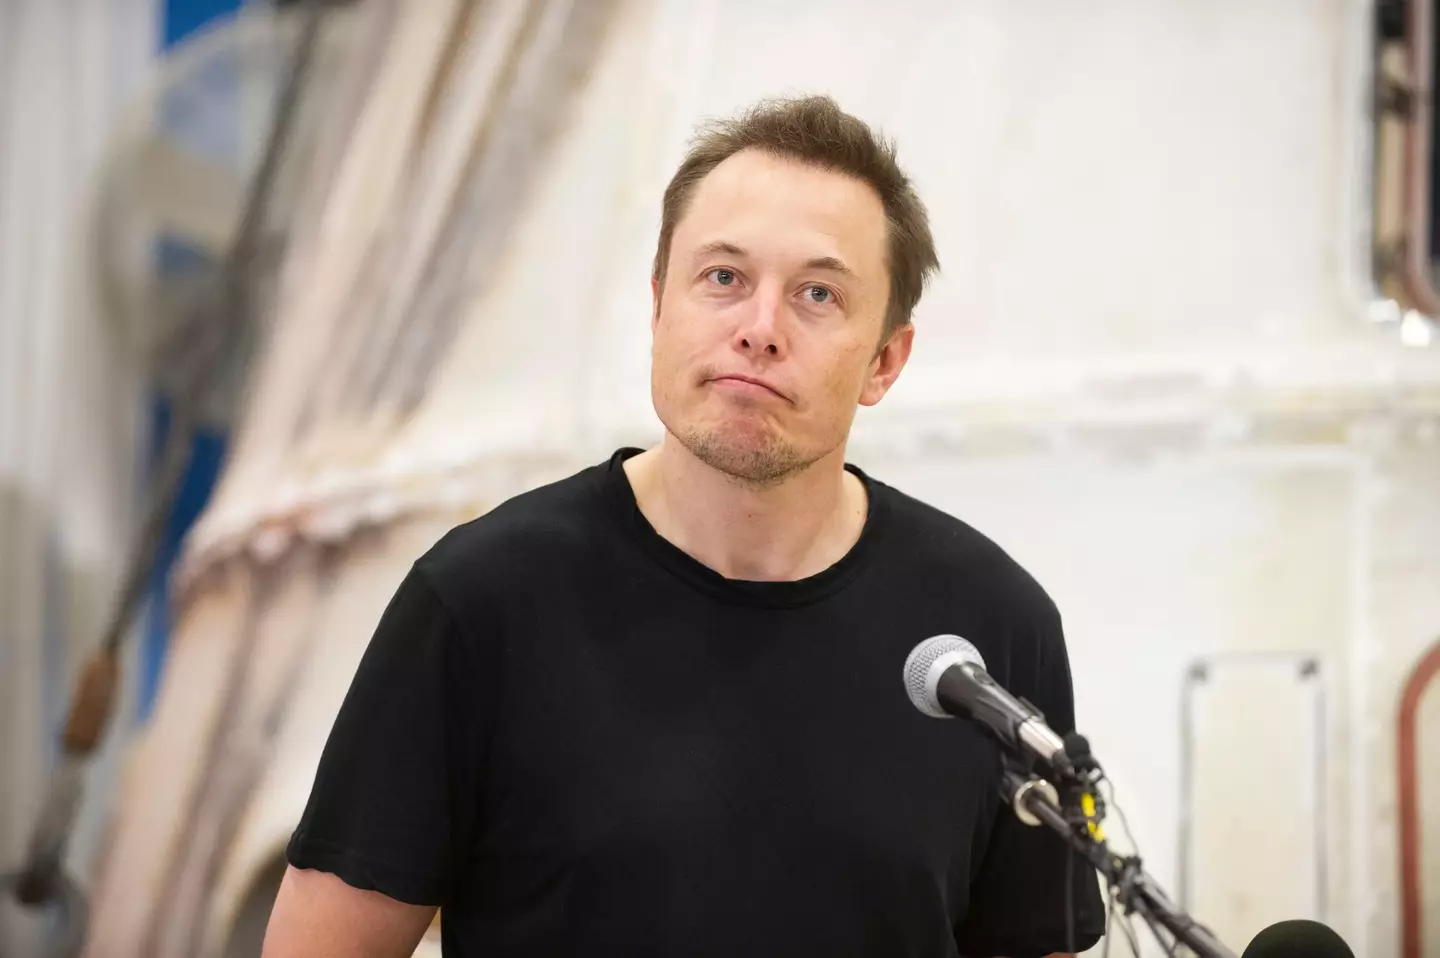 Elon Musk has sold almost $7 billion of Tesla stock over the last week.